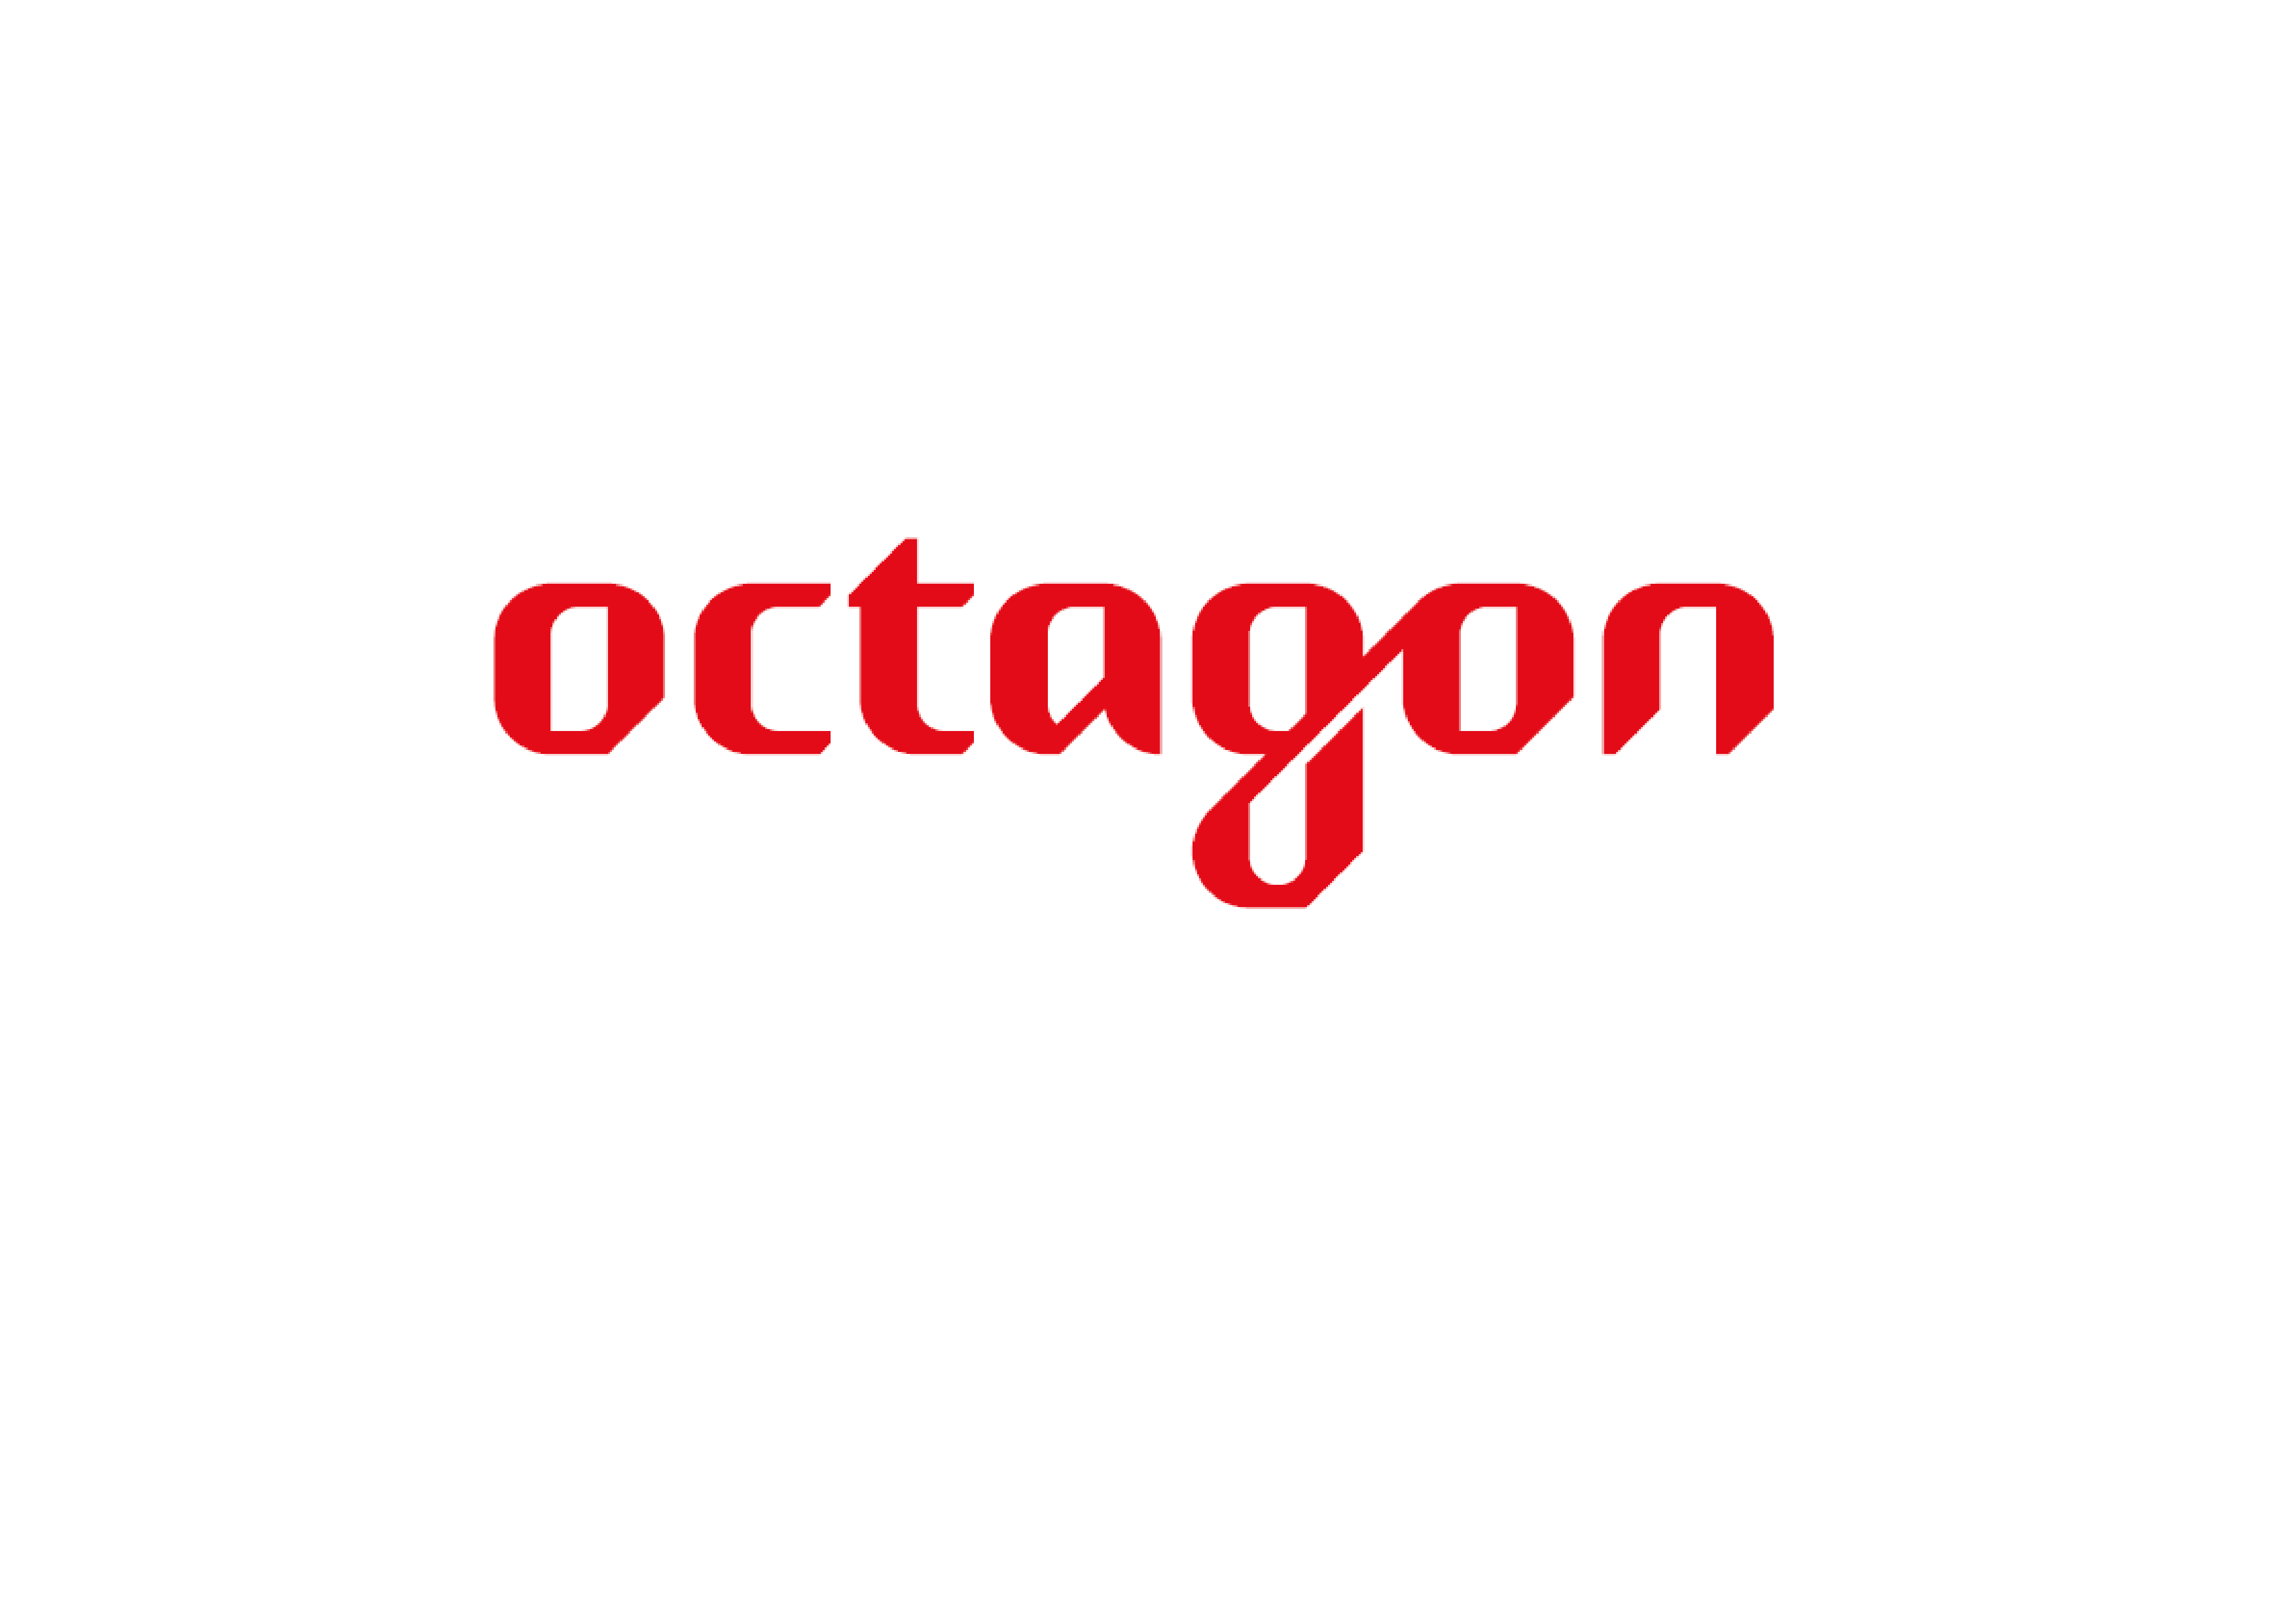 octagon-01